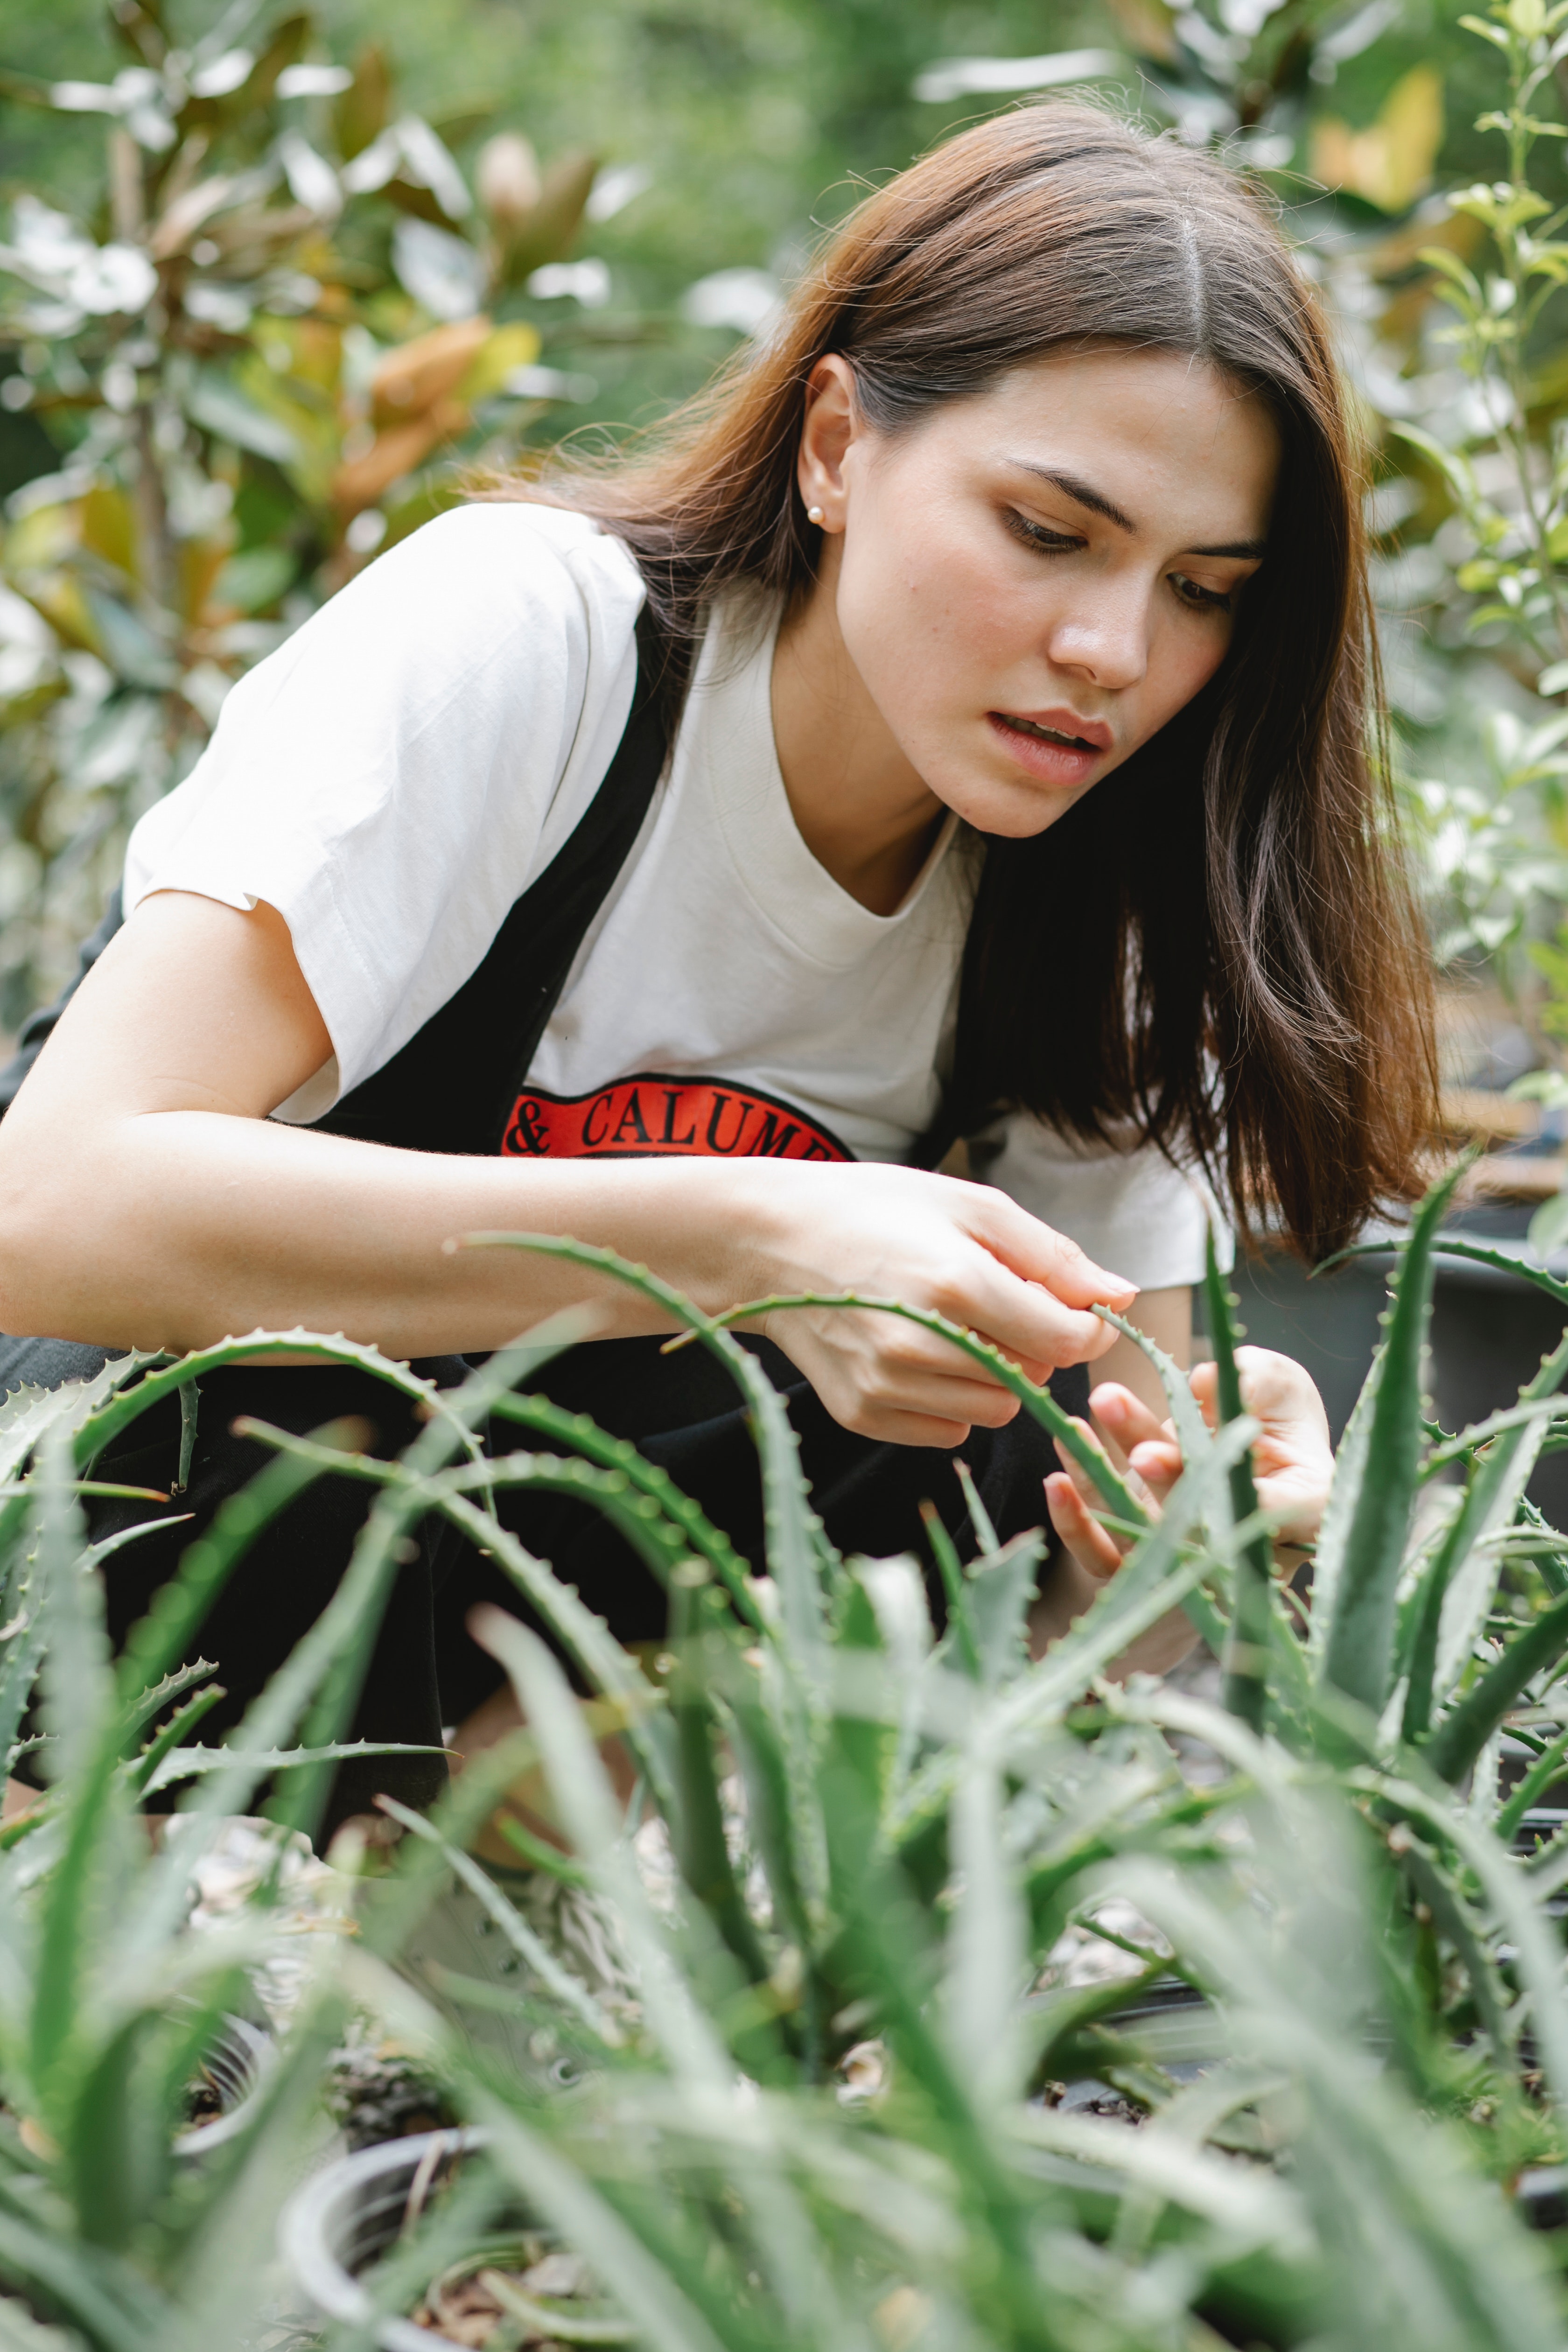 A woman exploring a patch of aloe vera plants. | Source: Pexels